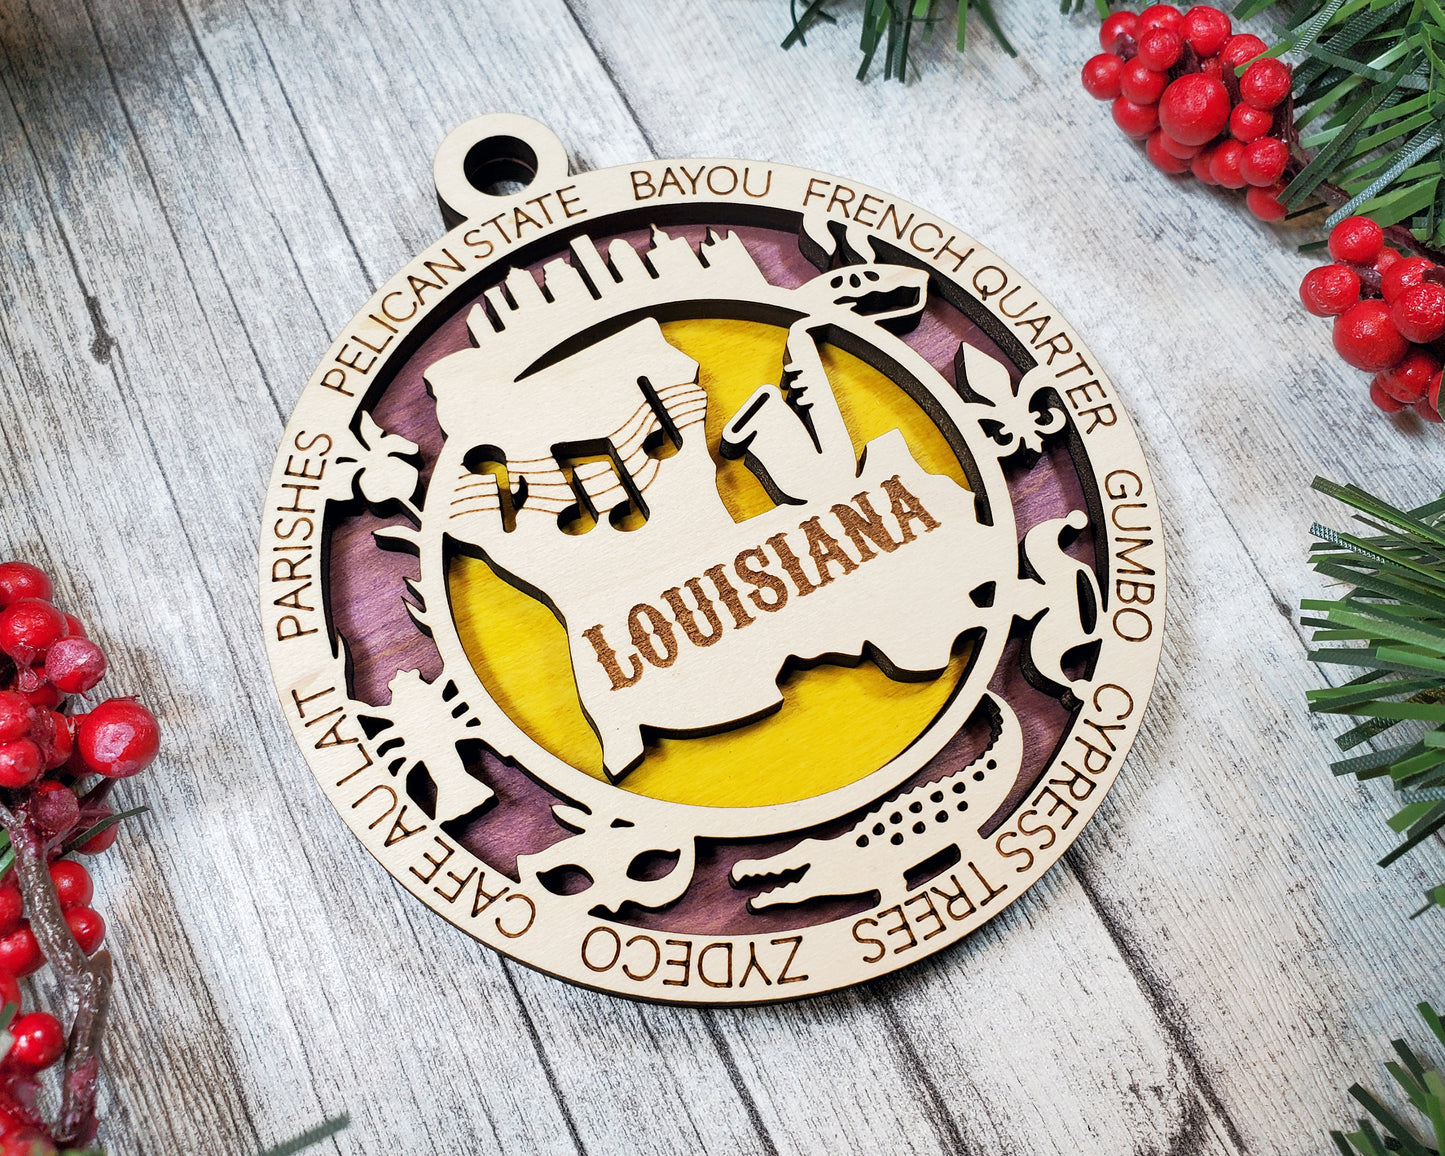 Louisiana Ornament